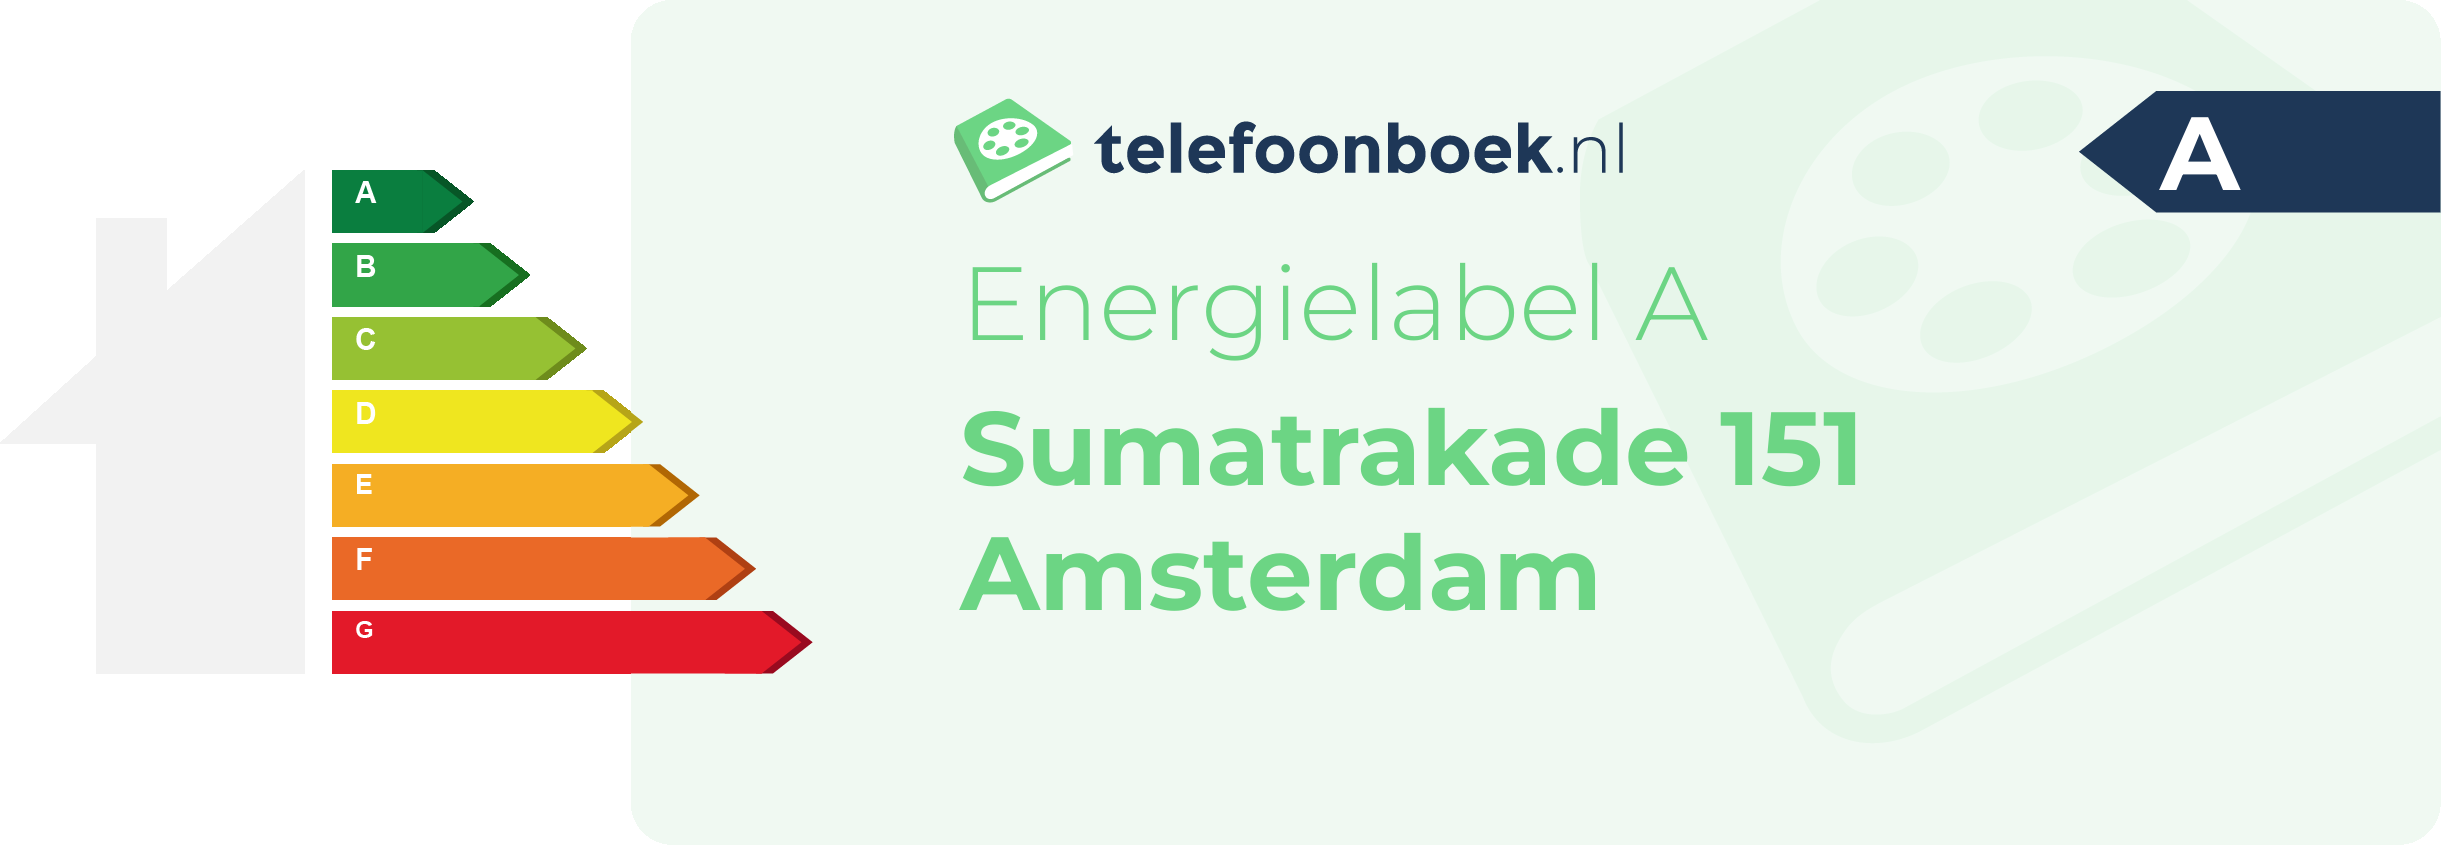 Energielabel Sumatrakade 151 Amsterdam